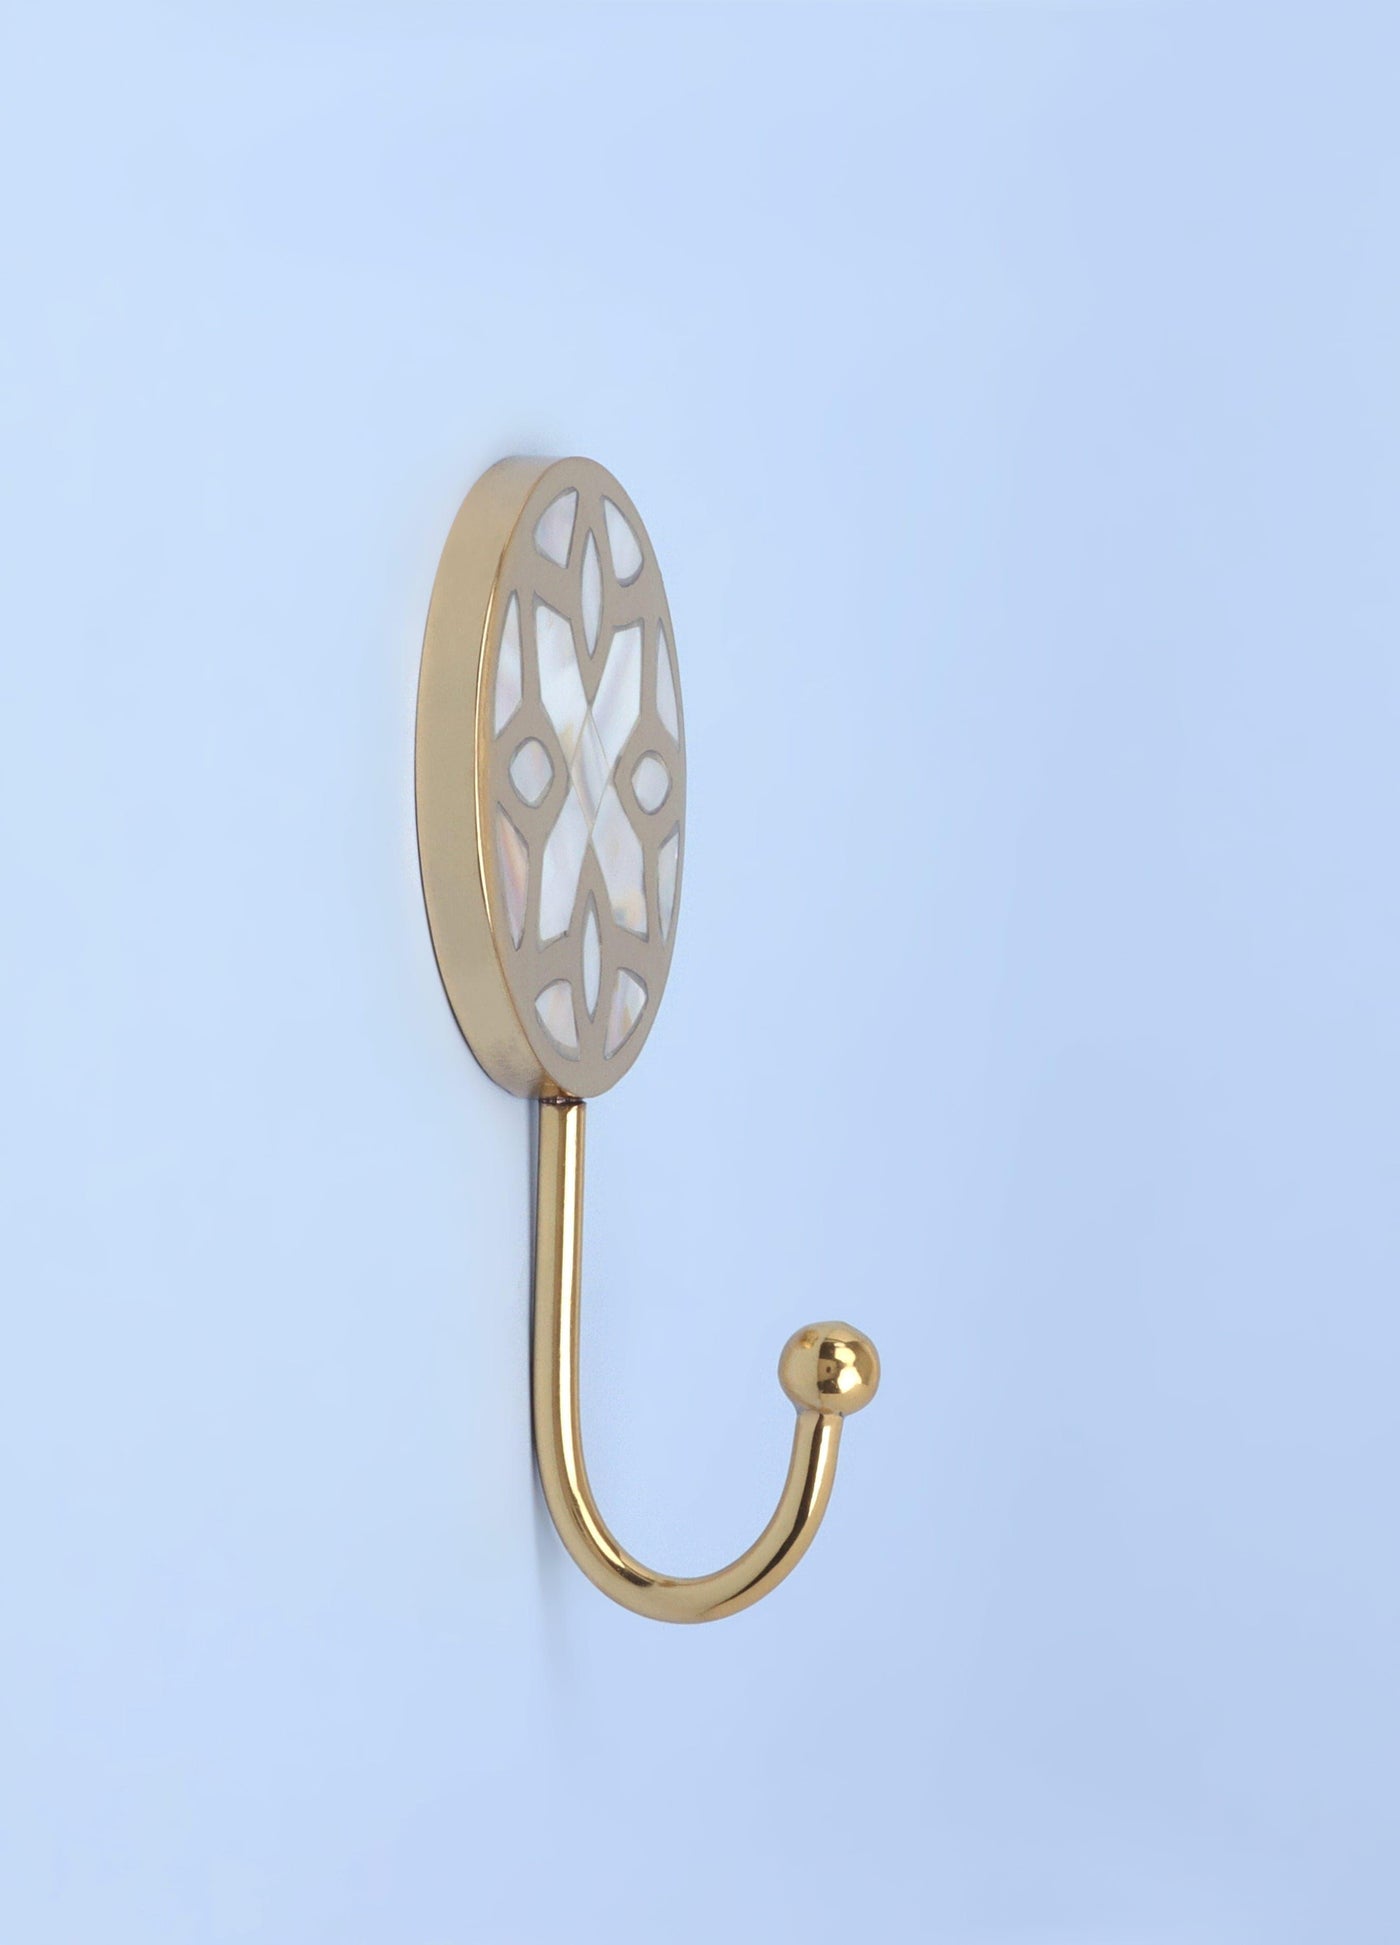 G Decor All Hooks Single Hook / Gold Gold Mother Of Pearl Patterned Brass Coat Hooks